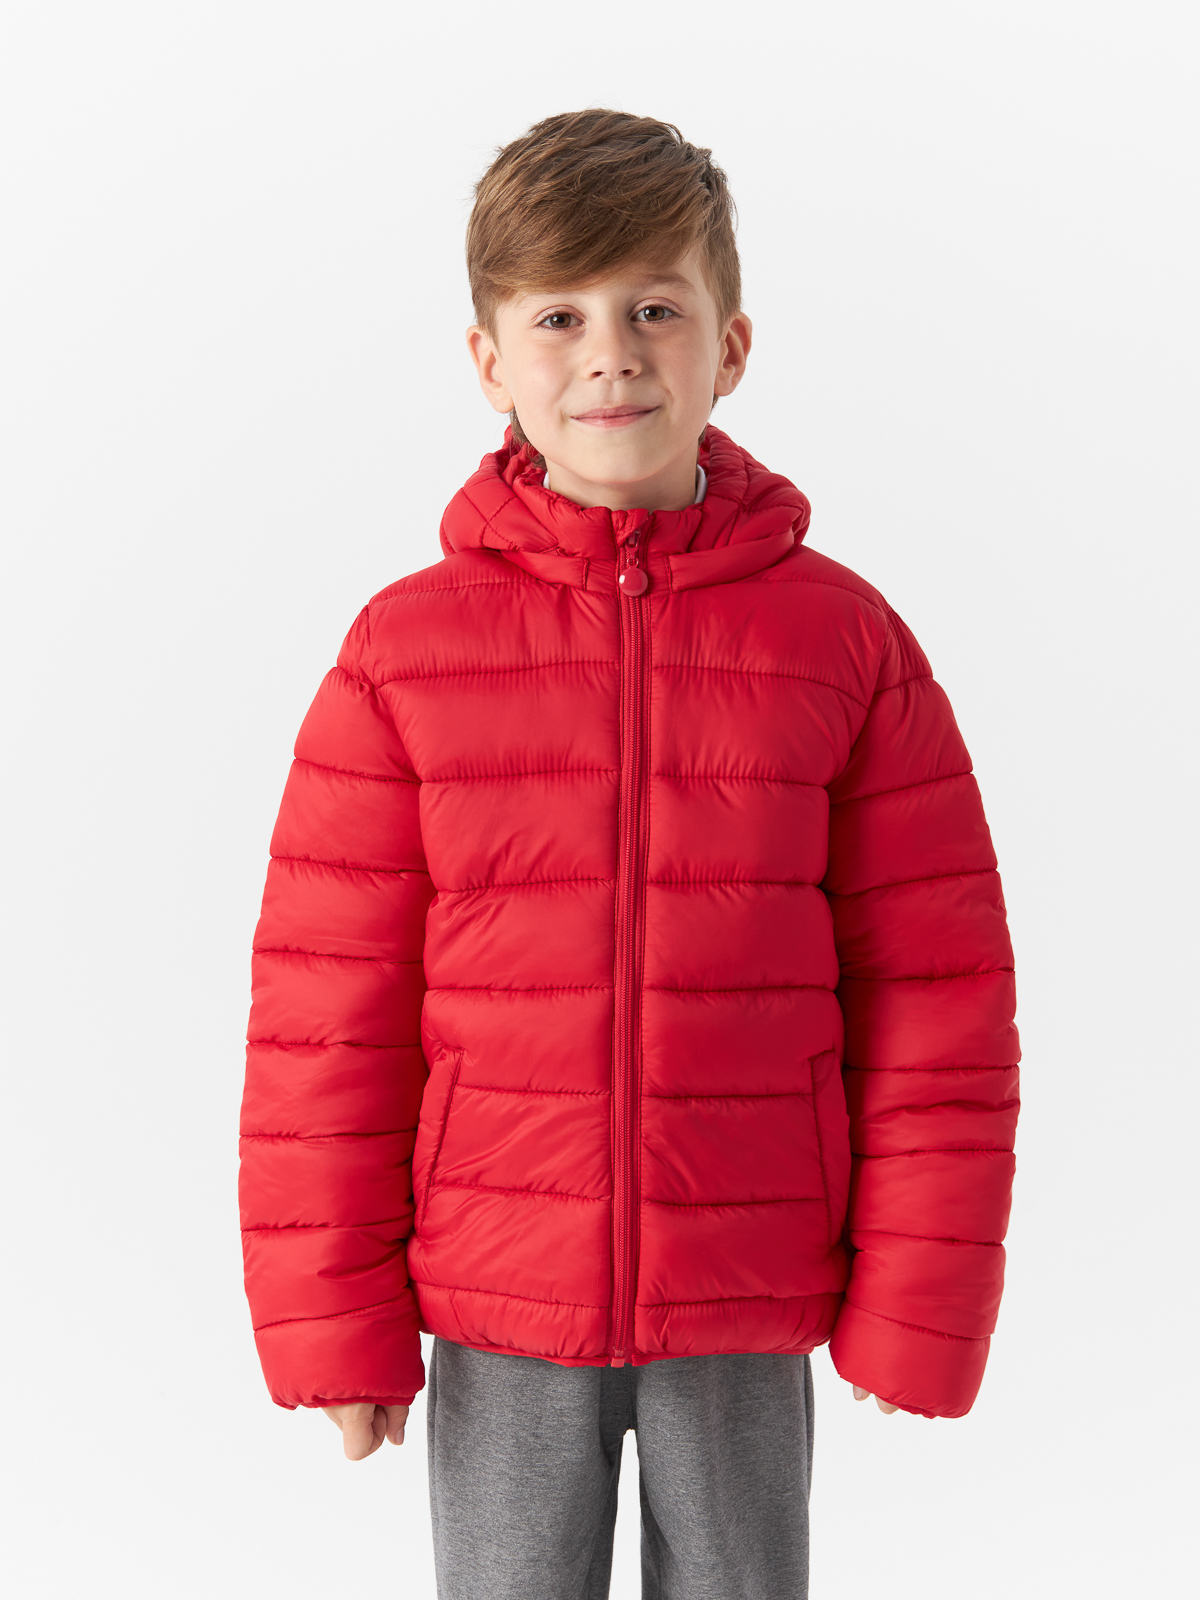 Куртка Mcstyles для мальчиков, размер 98, SMM10, красная